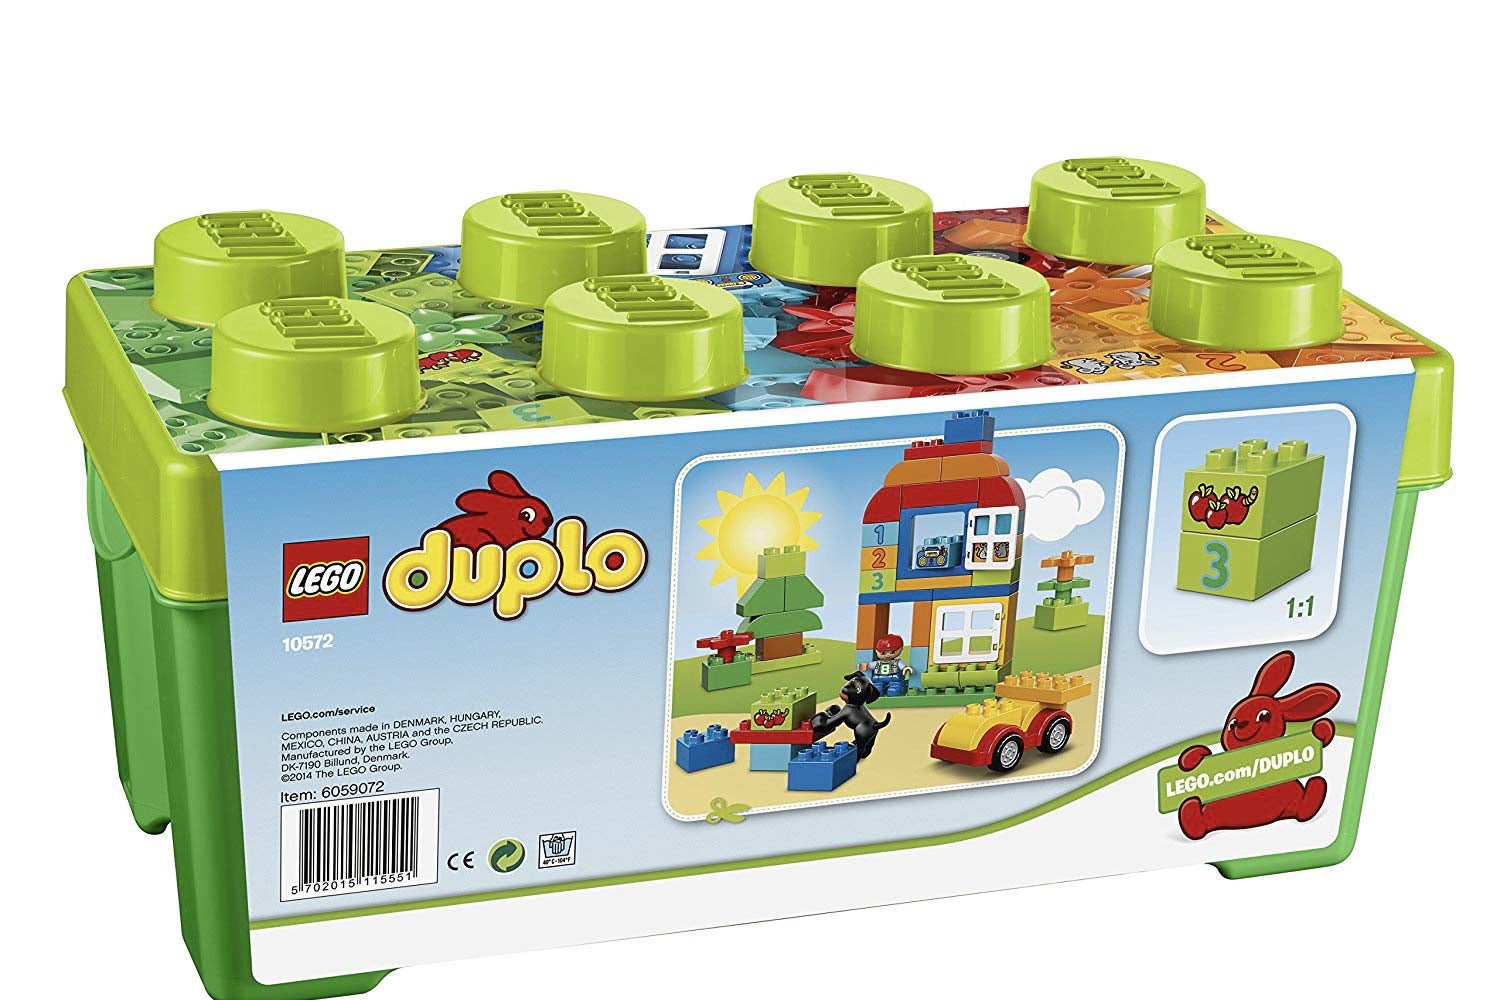 Duplo Play Set, LEGO Baseplate.